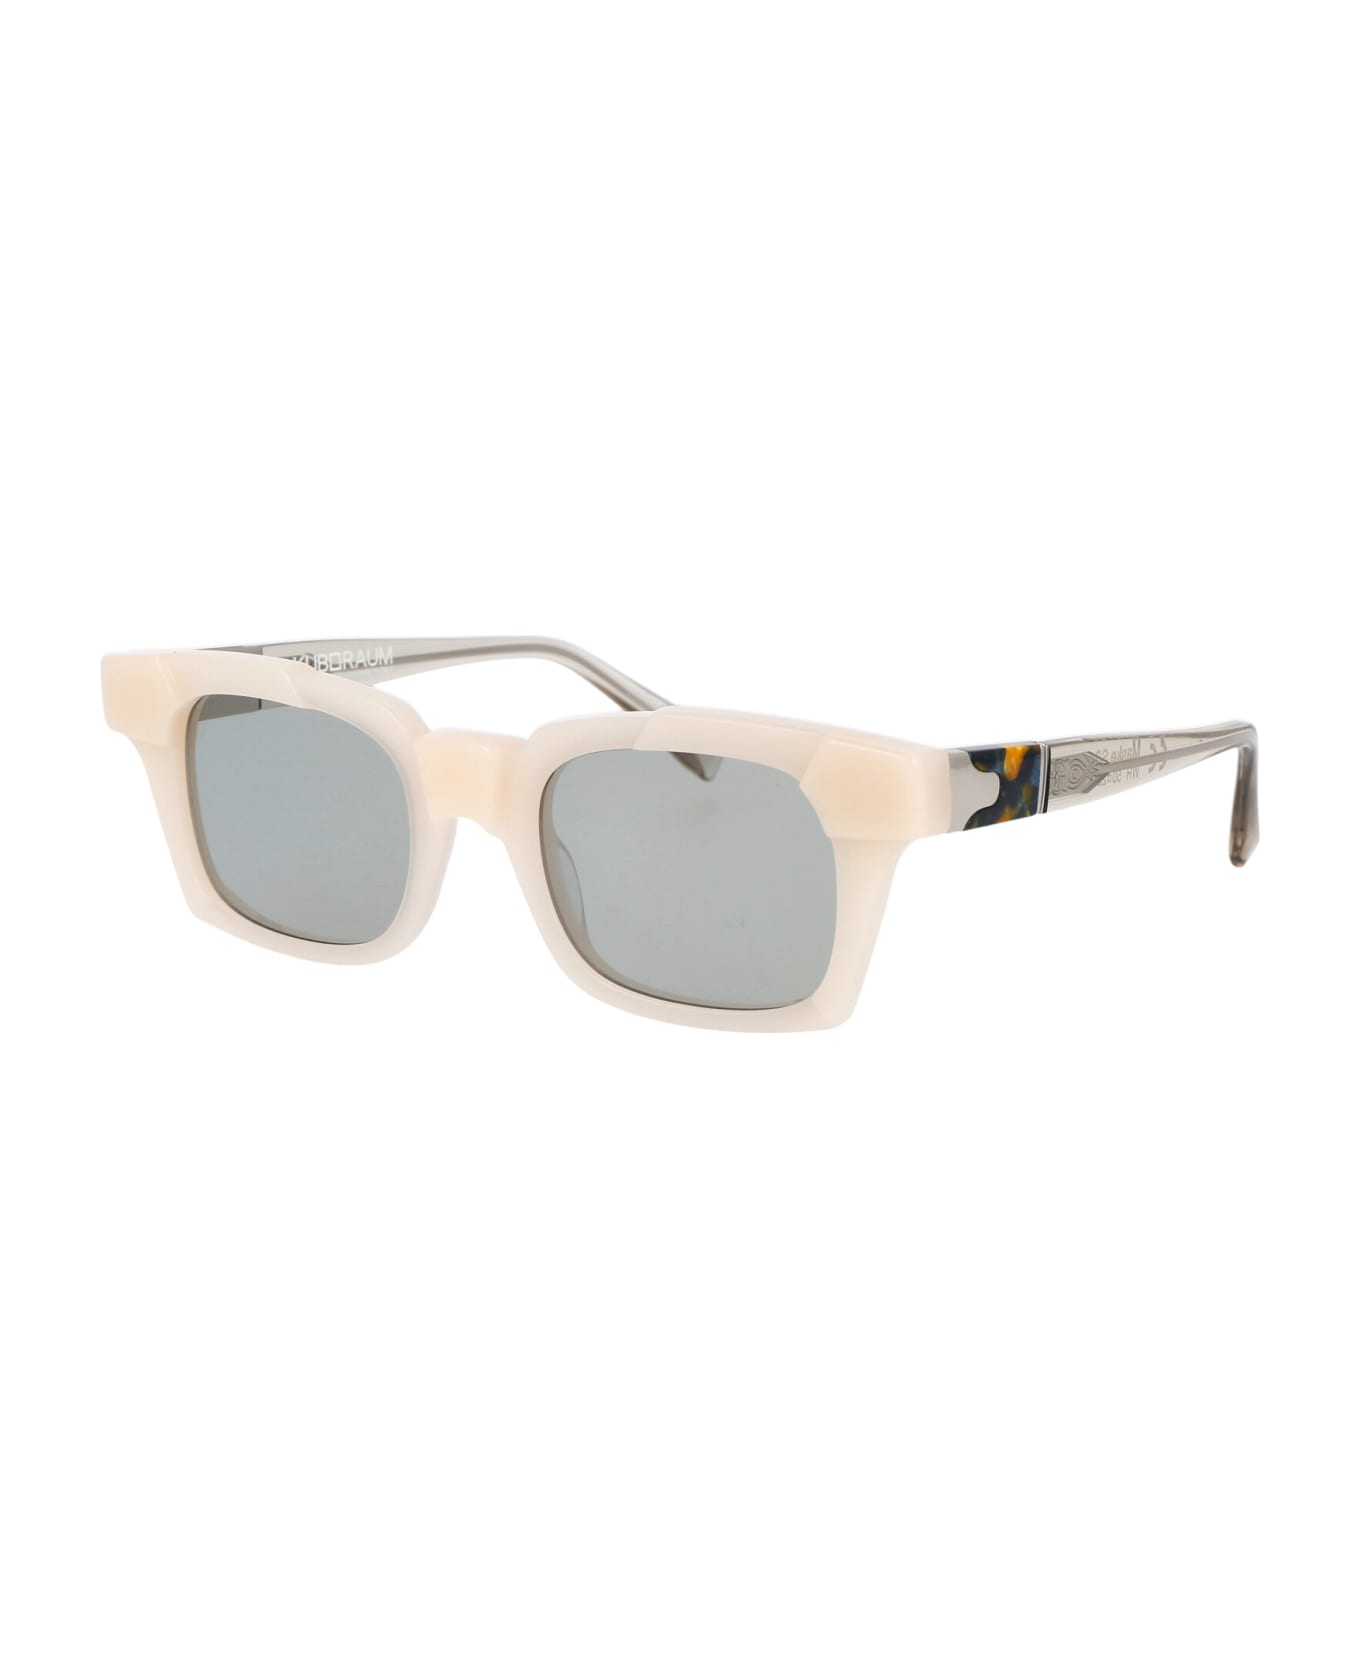 Kuboraum Maske S3 Sunglasses - WH grey1 サングラス